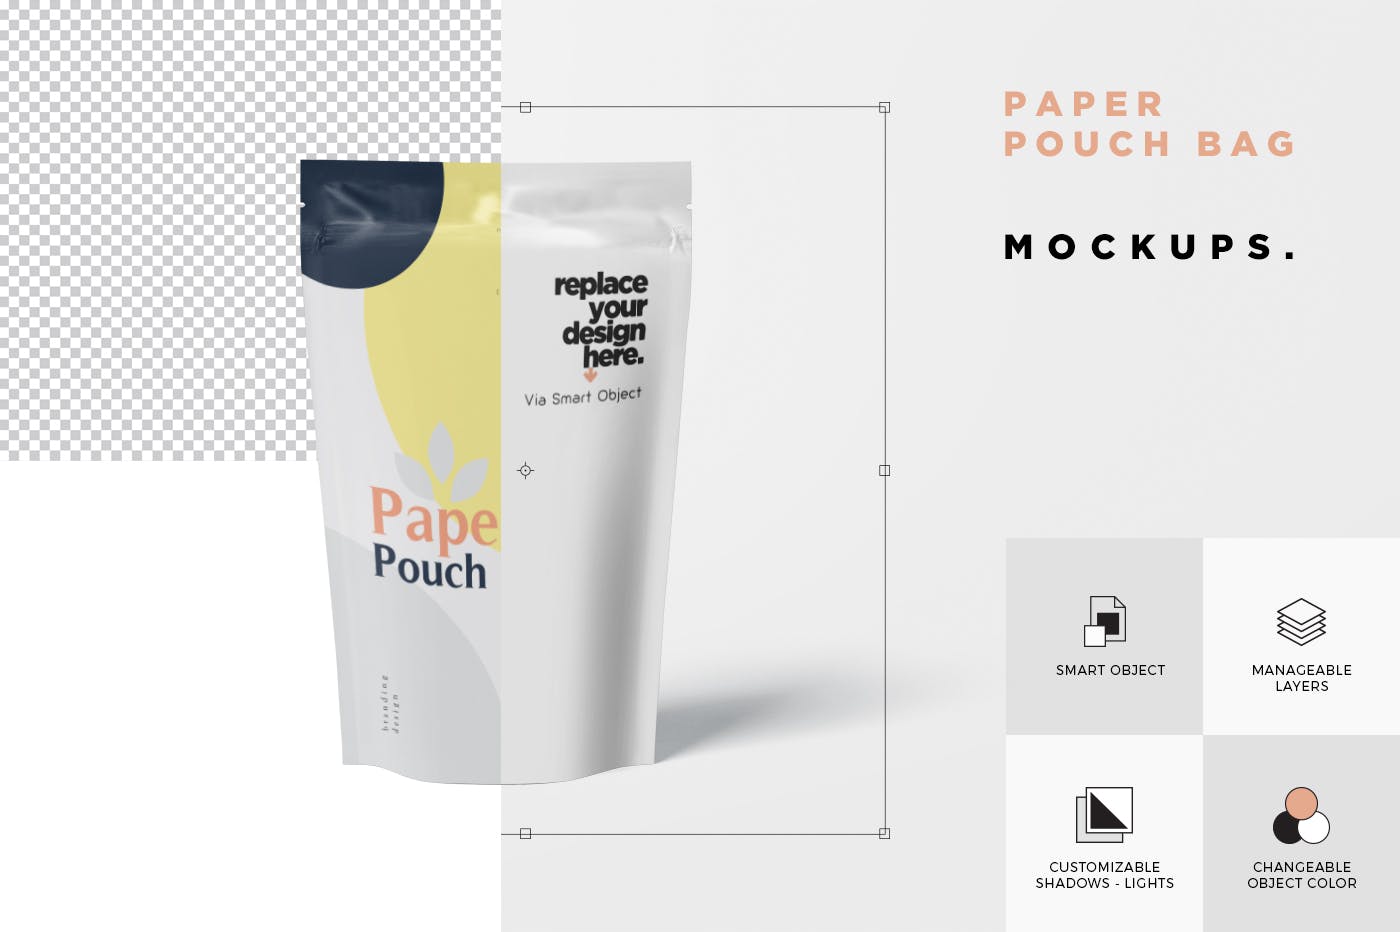 食品自封袋包装设计效果图第一素材精选 Paper Pouch Bag Mockup – Large Size插图(5)